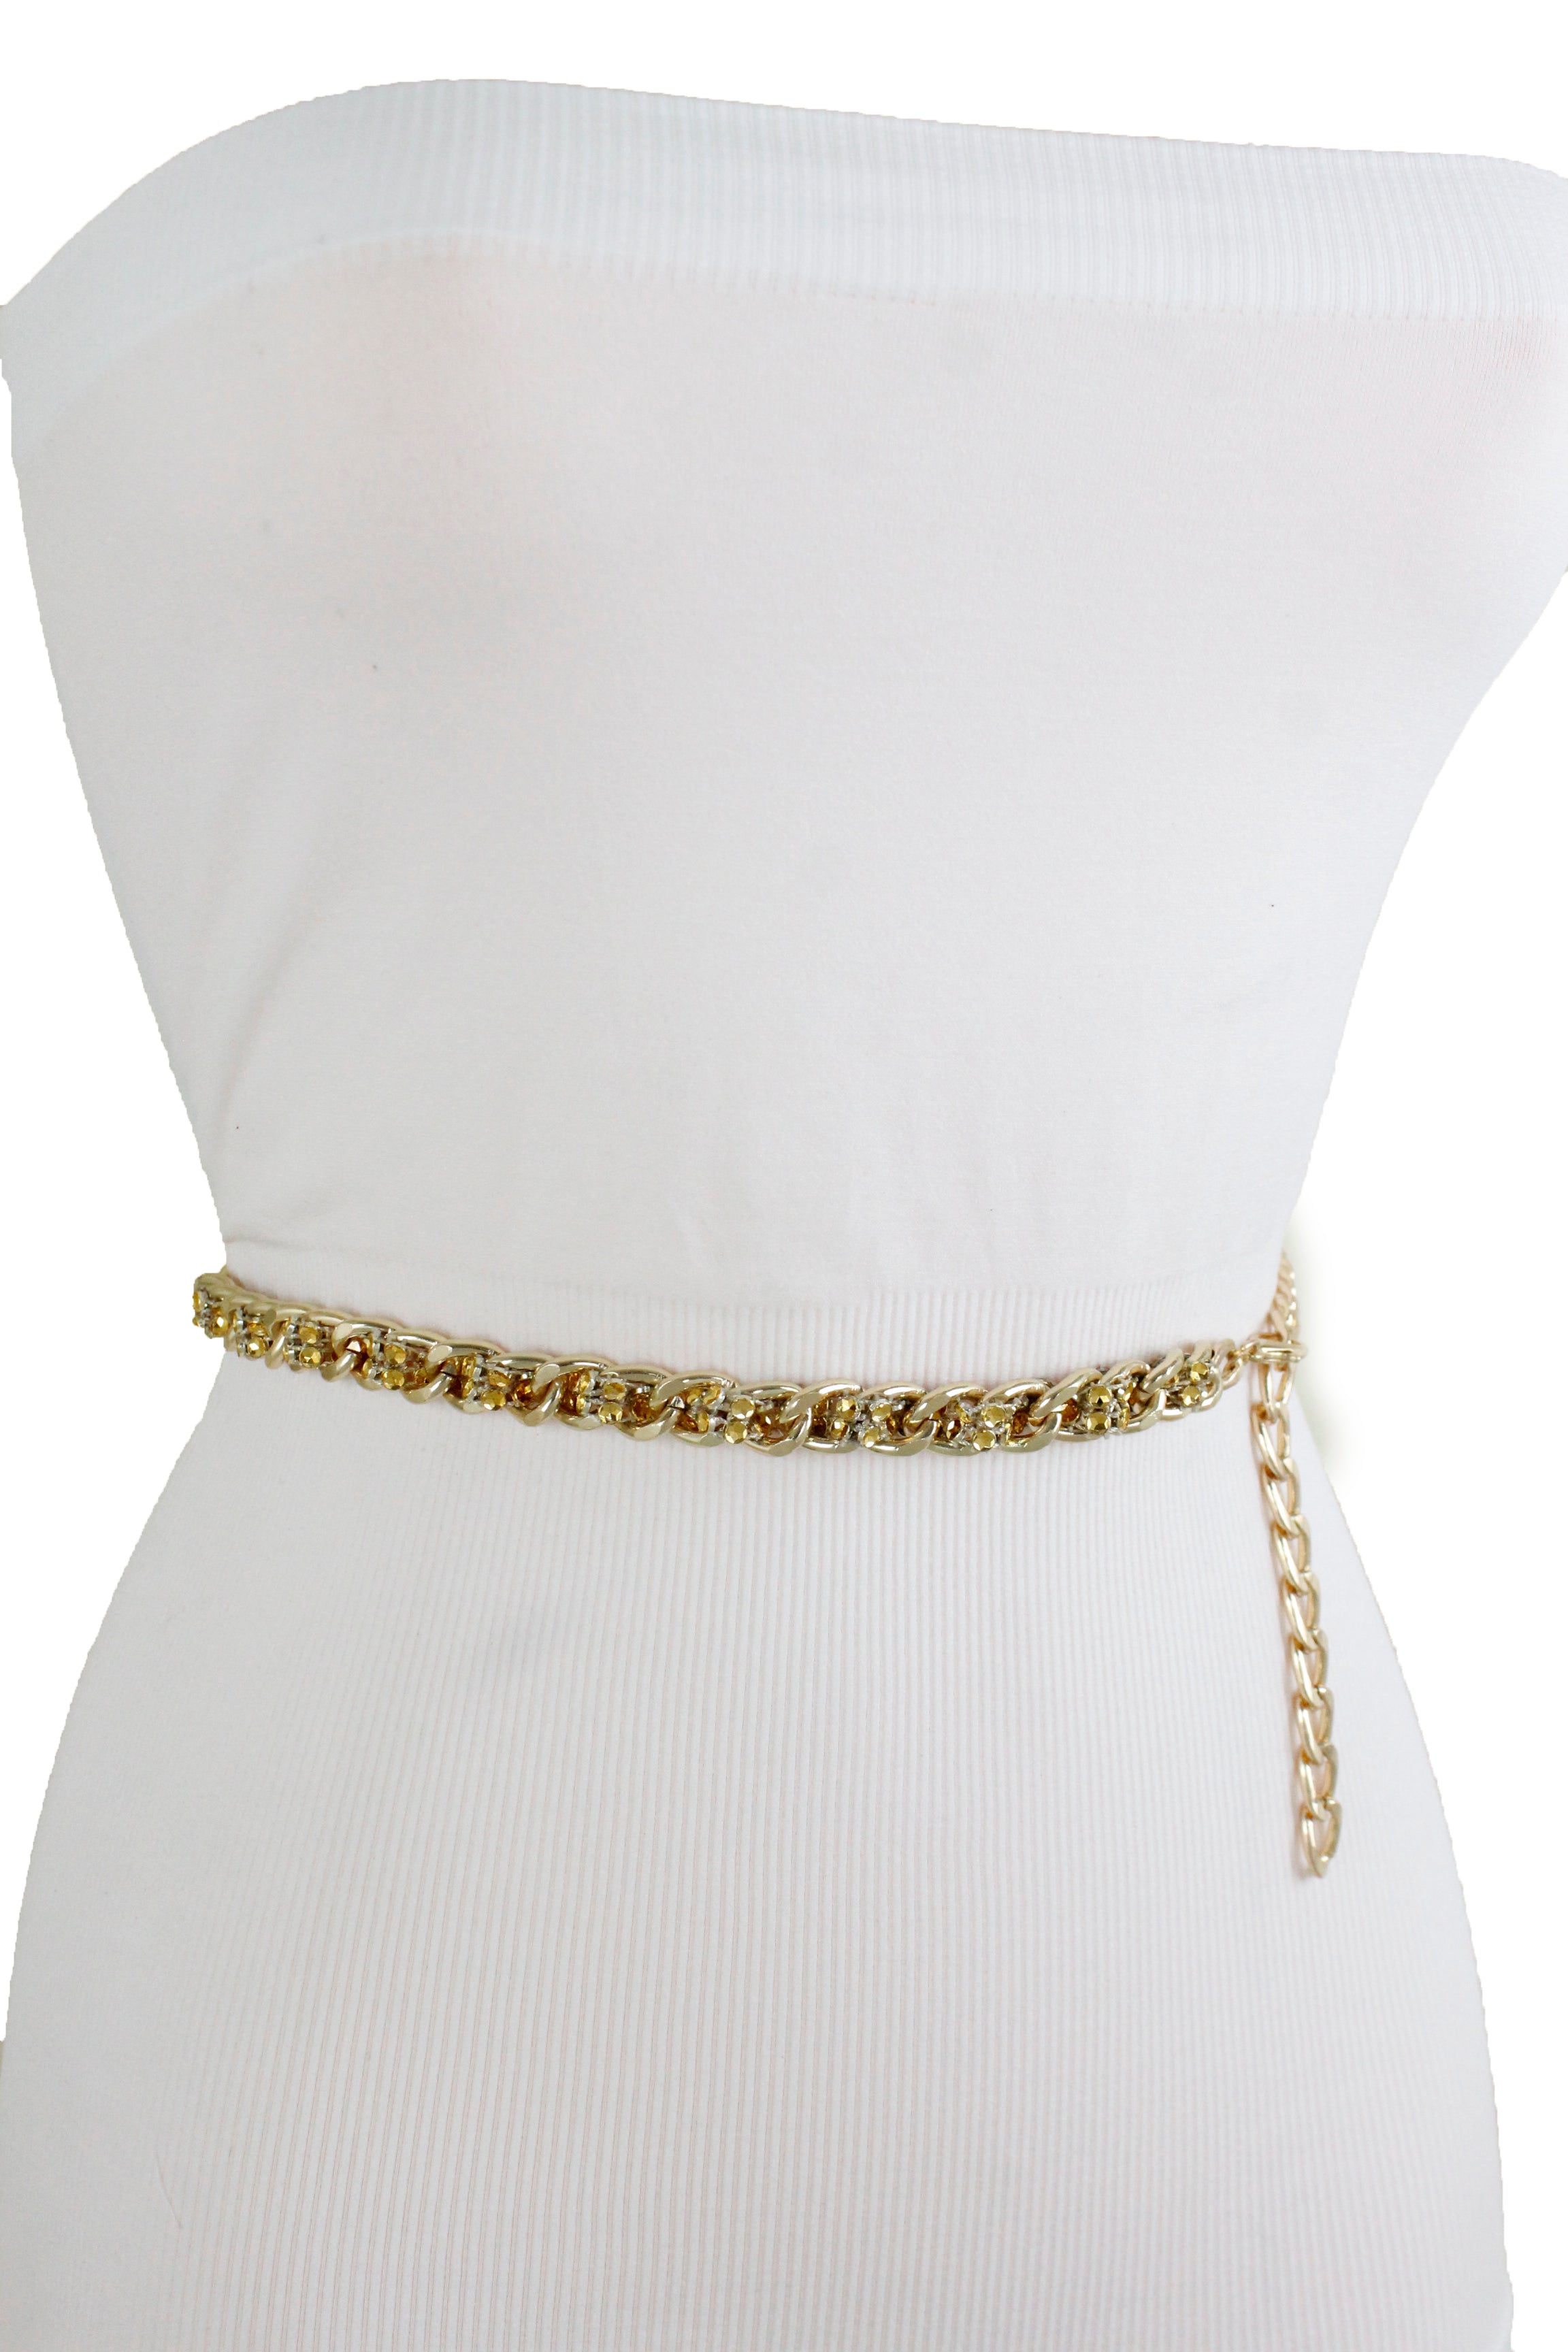 Alwaystyle4You Women Belt Gold Metal Chain Links Hip Waist New Elegant Dressy Fashion Accessories, Women's, Size: Xs - Medium